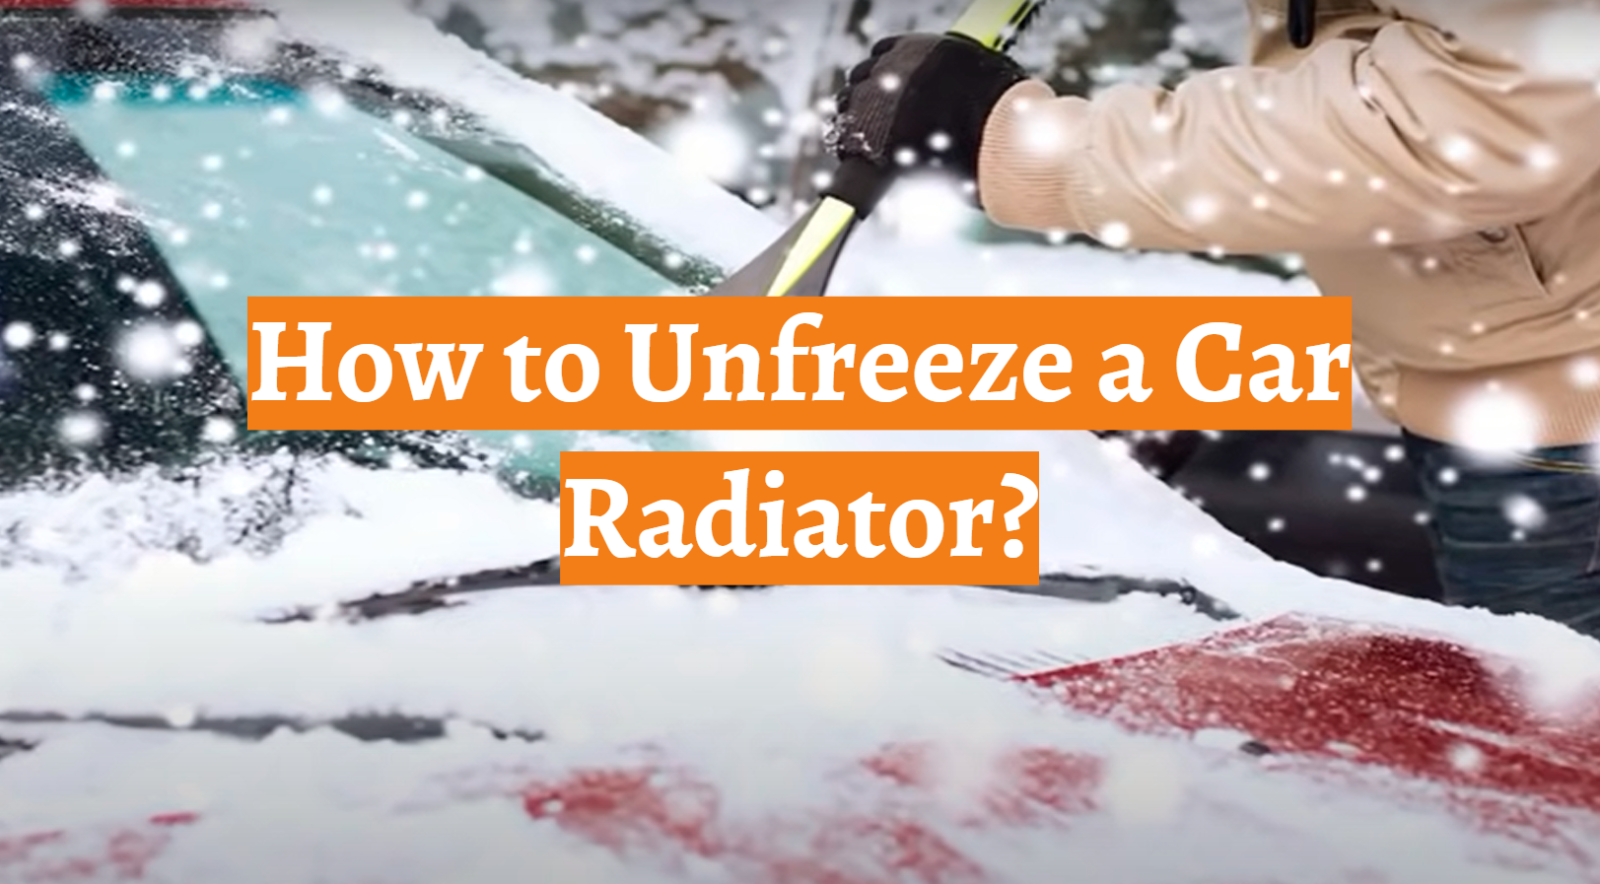 How to Unfreeze a Car Radiator?